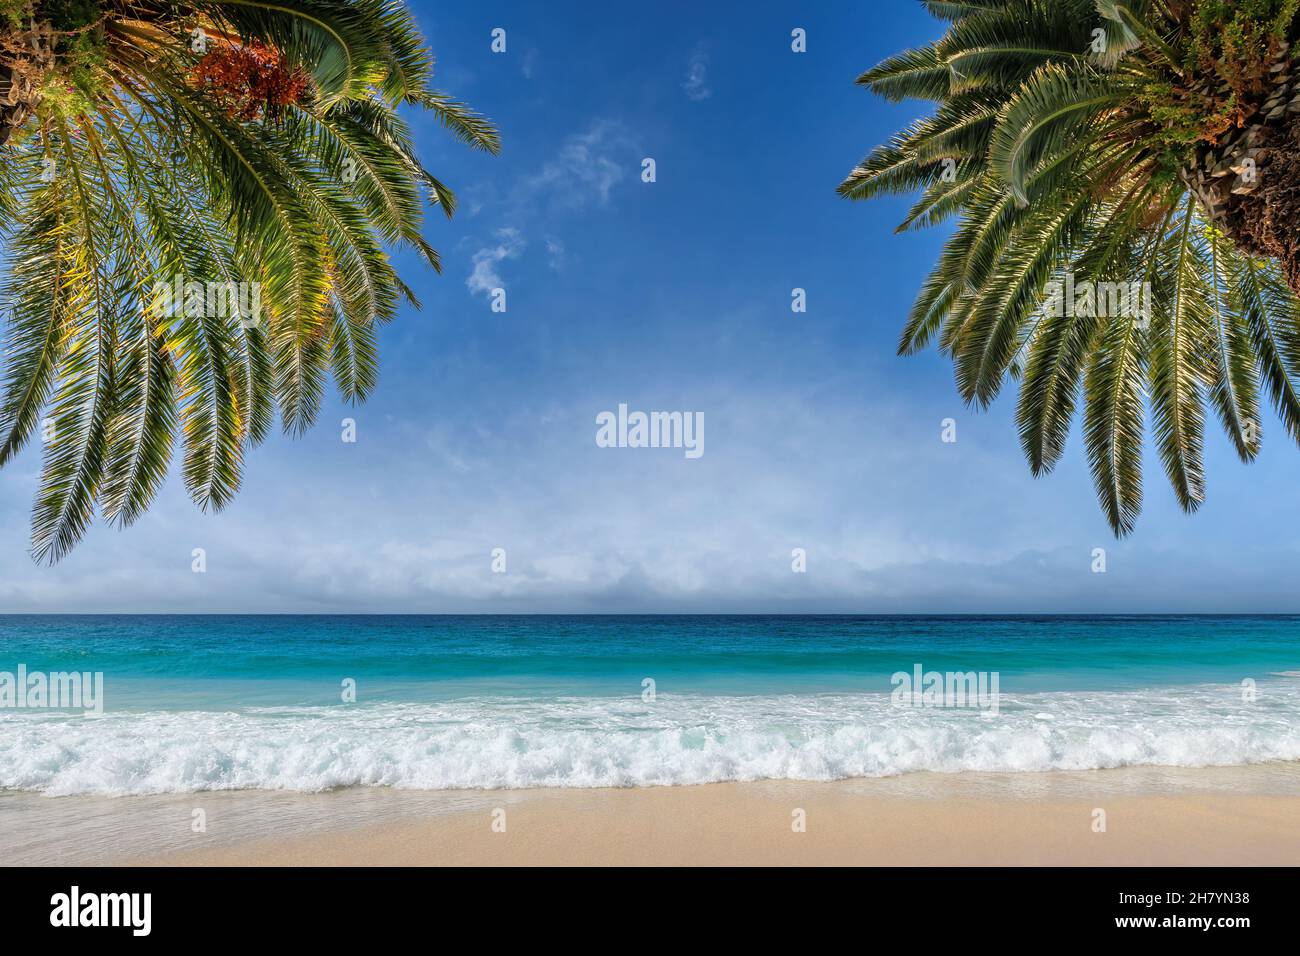 Palm trees in tropical ocean beach Stock Photo